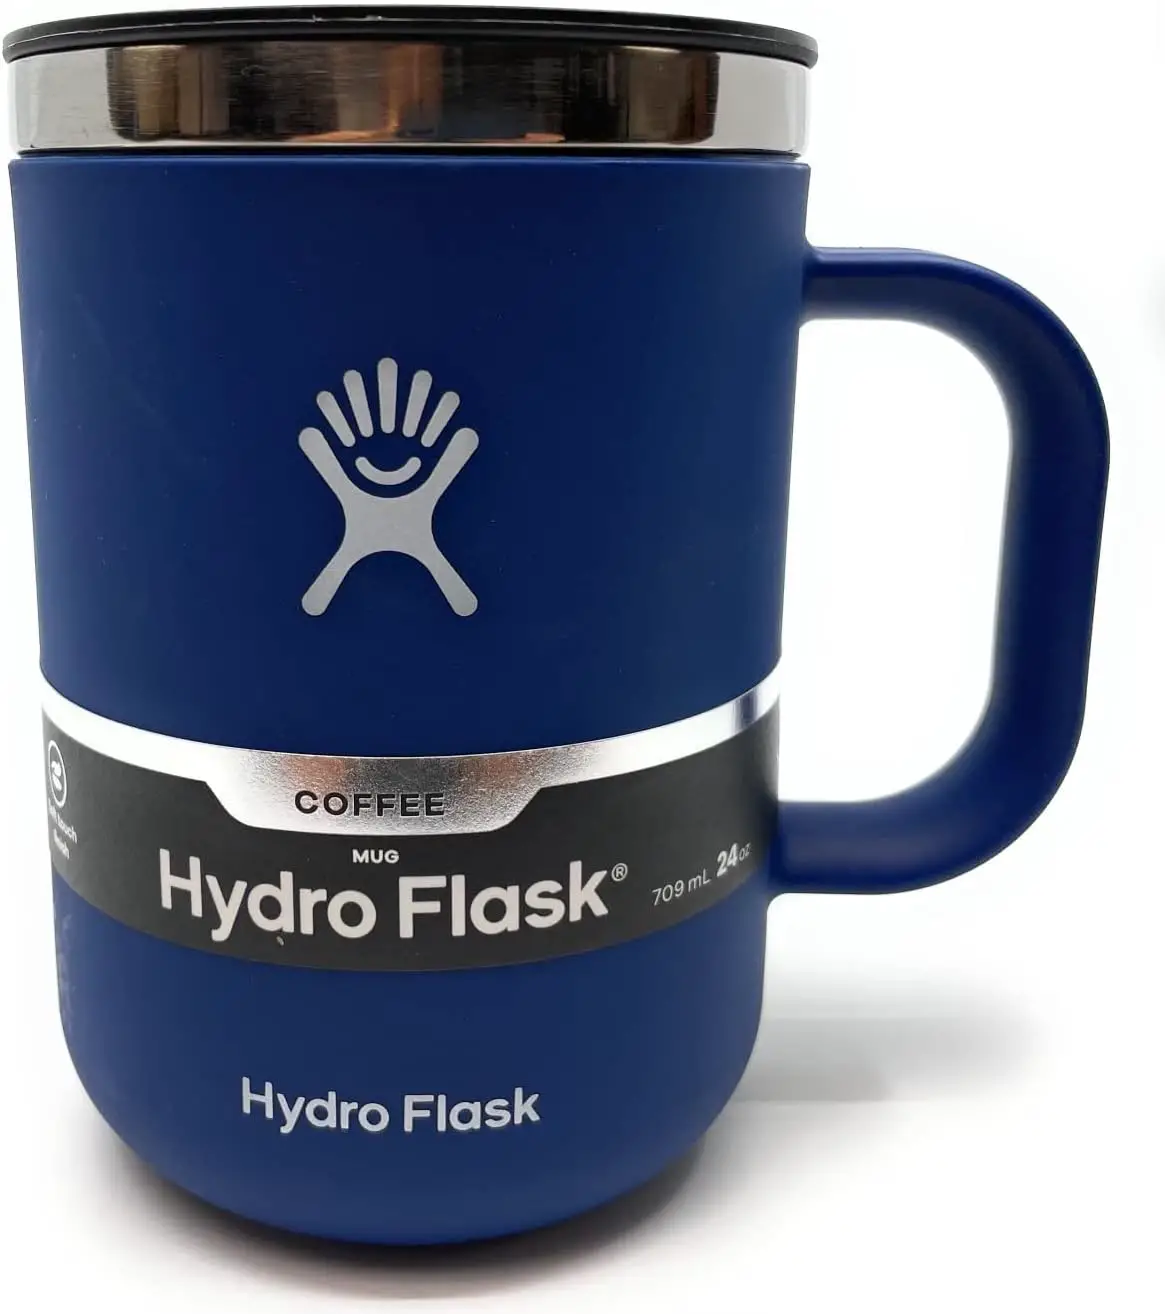 Hydro Flask Coffee Press Mug